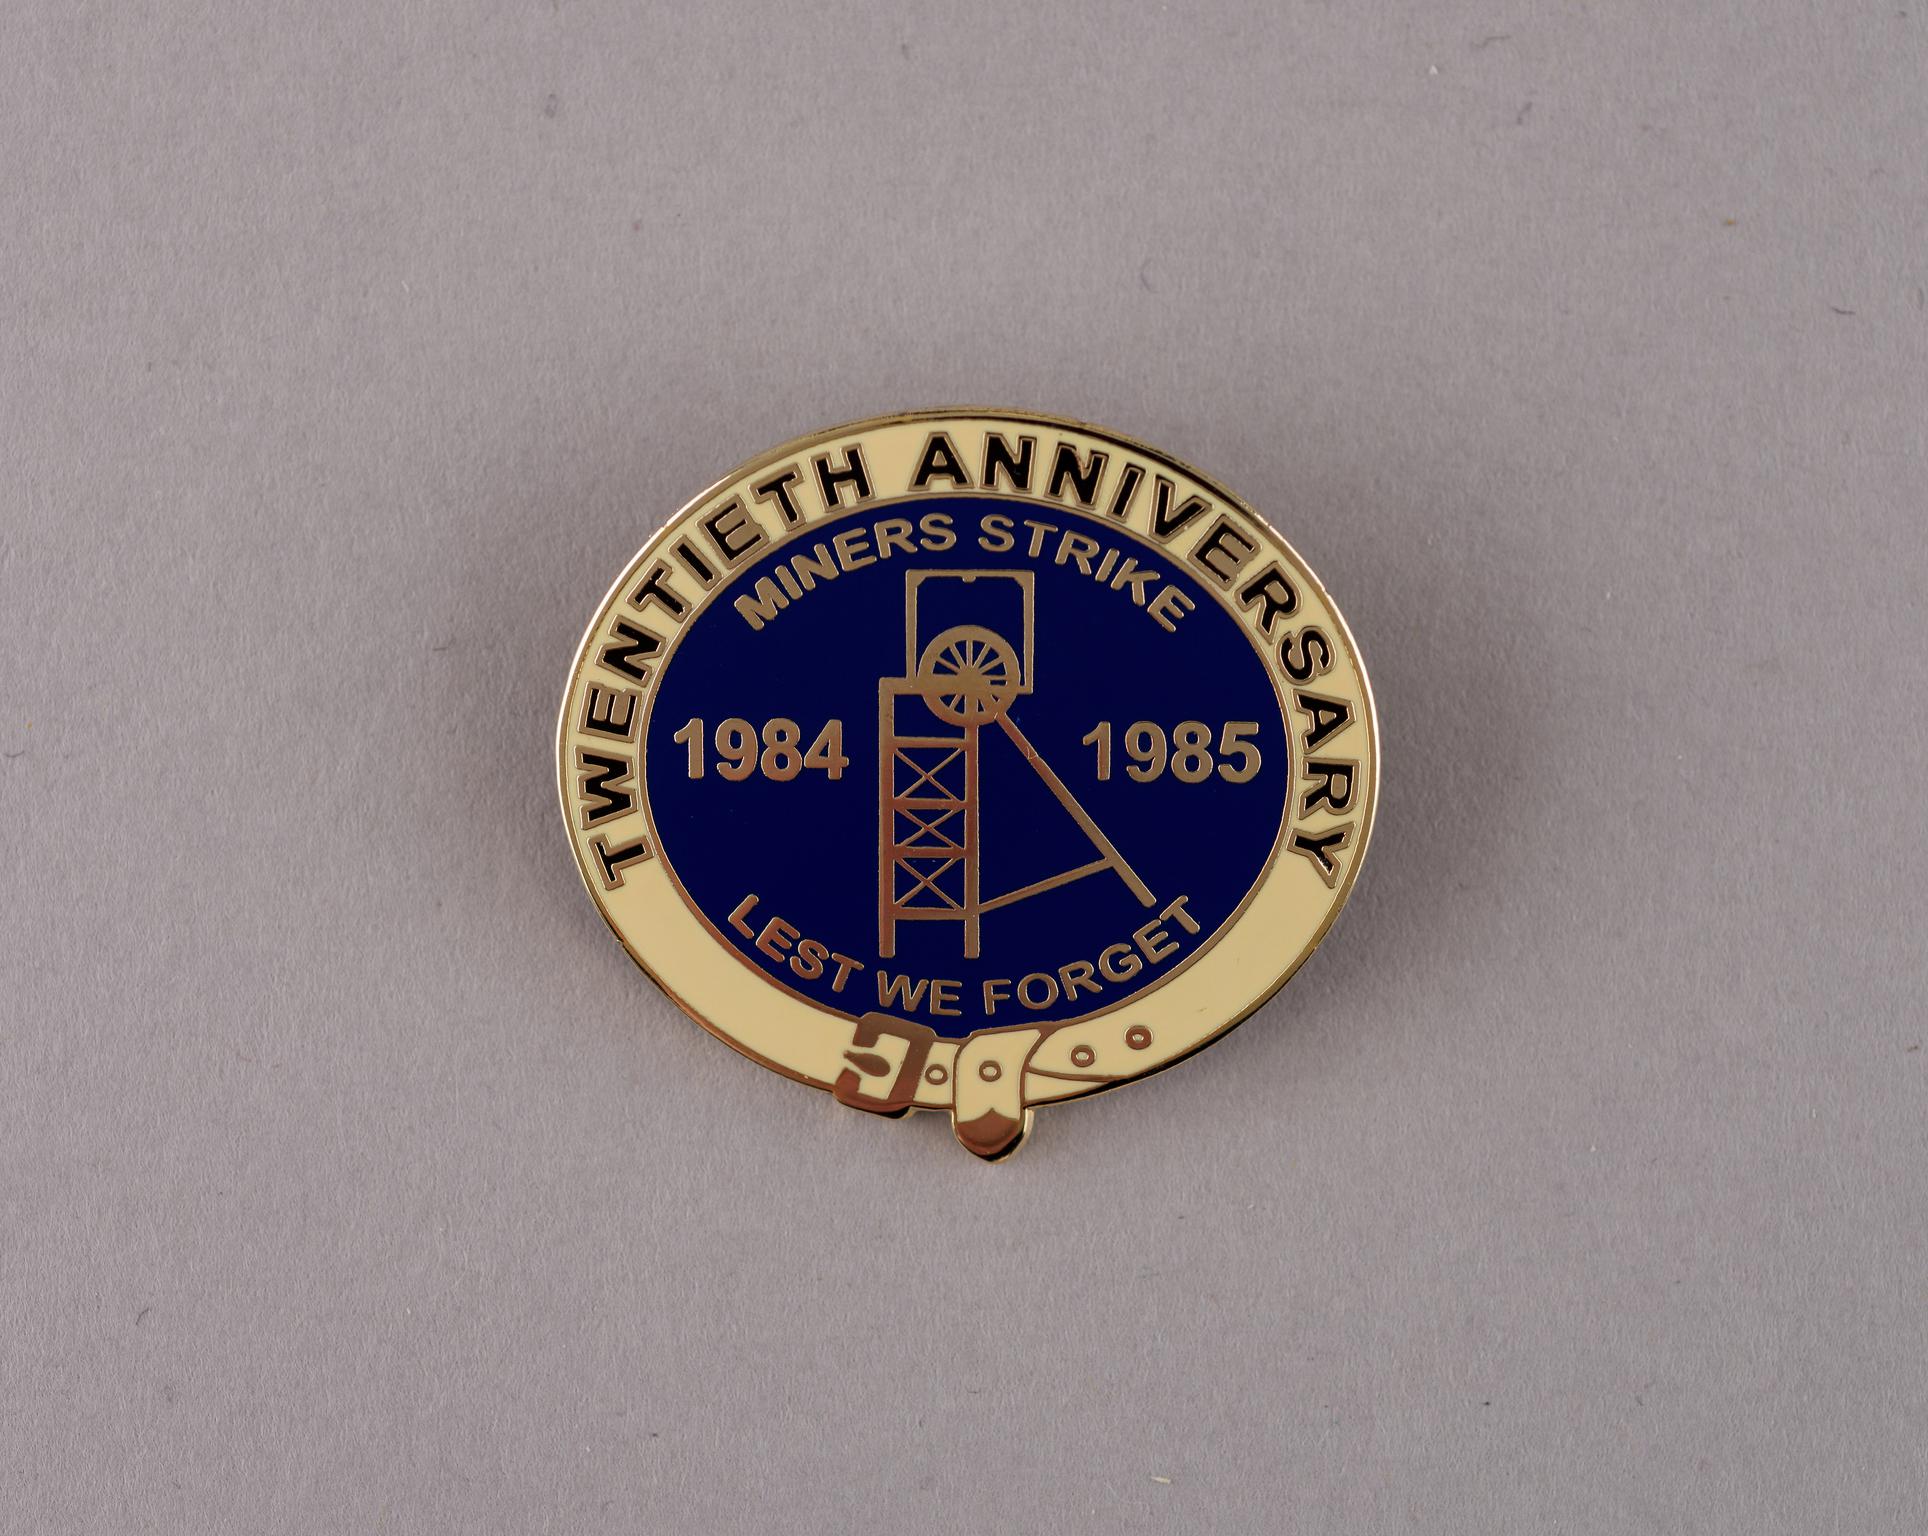 20th anniversary of miners' strike, badge